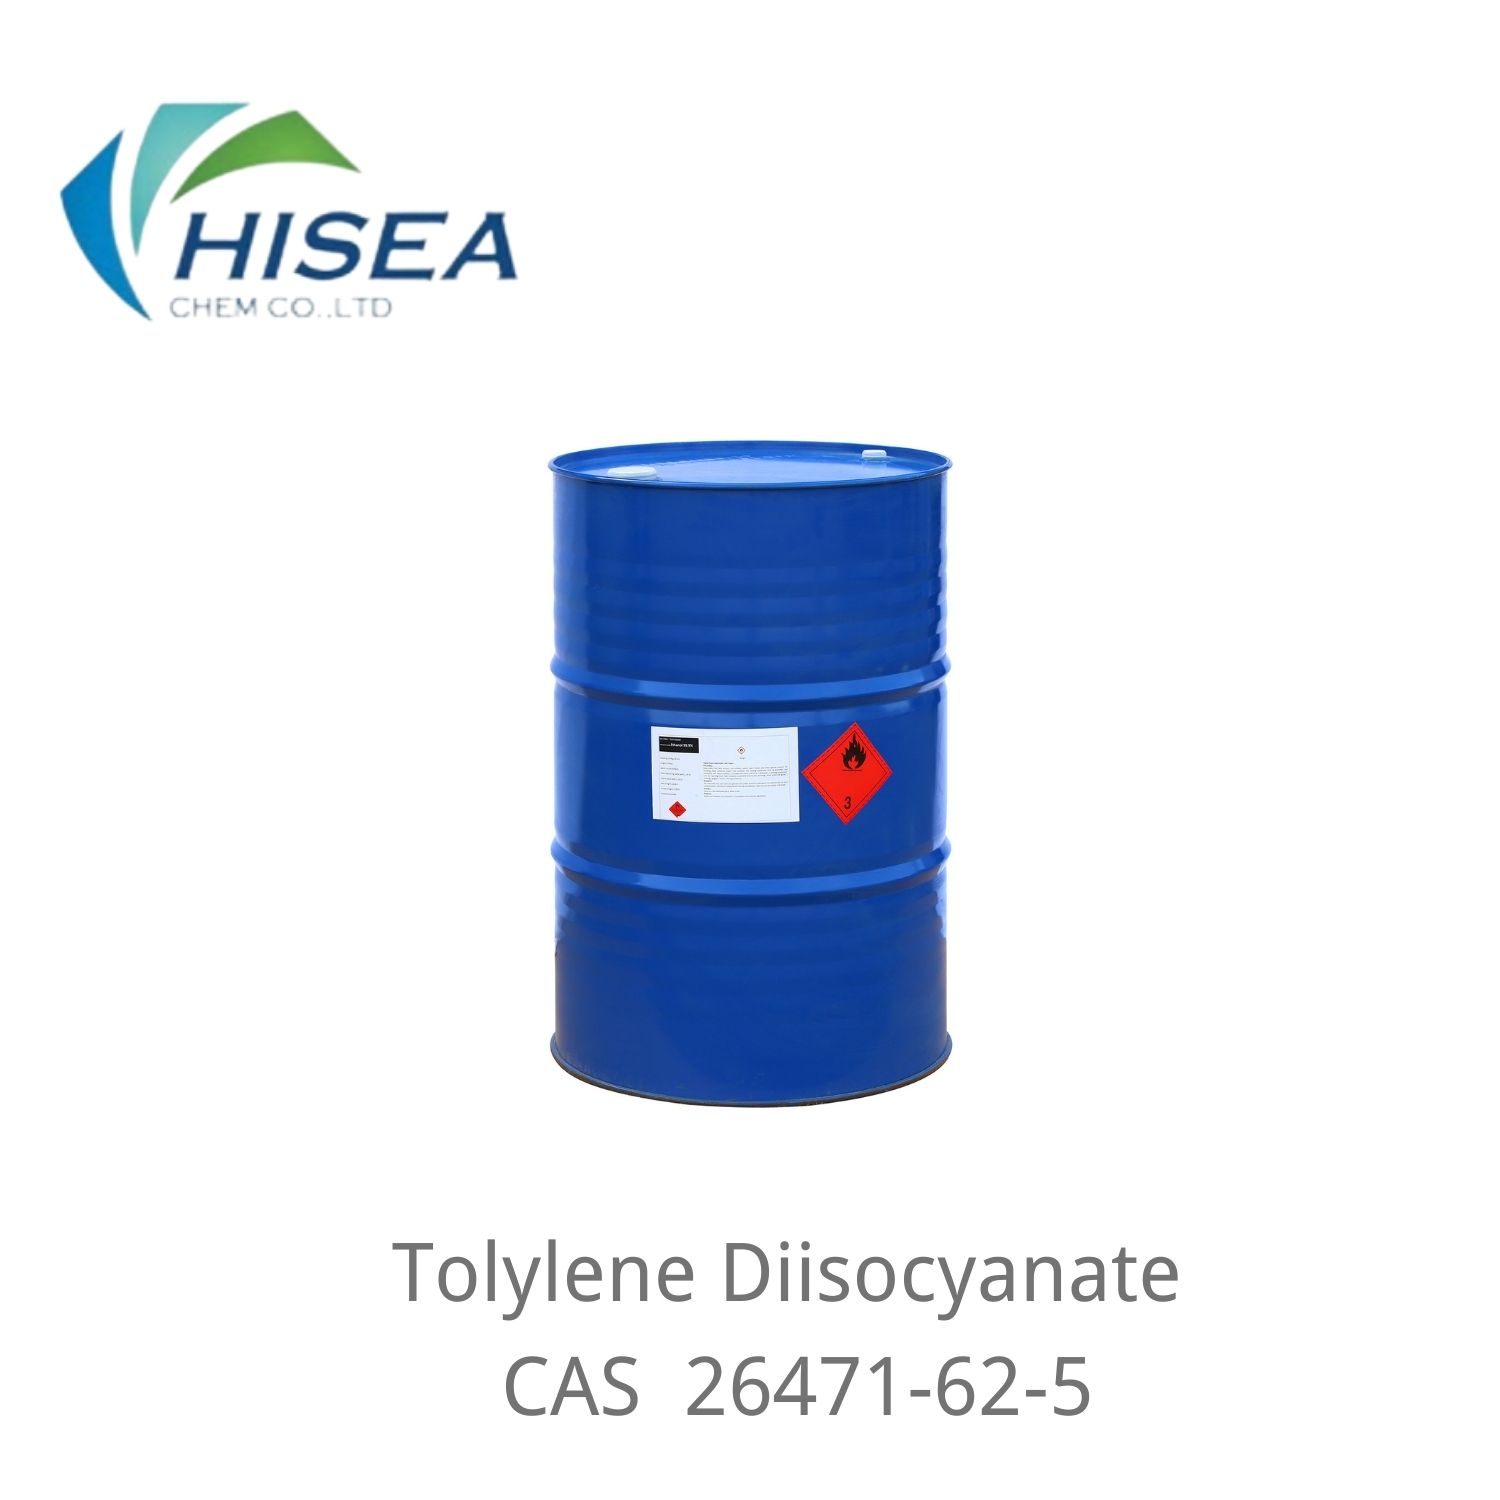 Fábrica de diisocianato de tolueno líquido de alta pureza